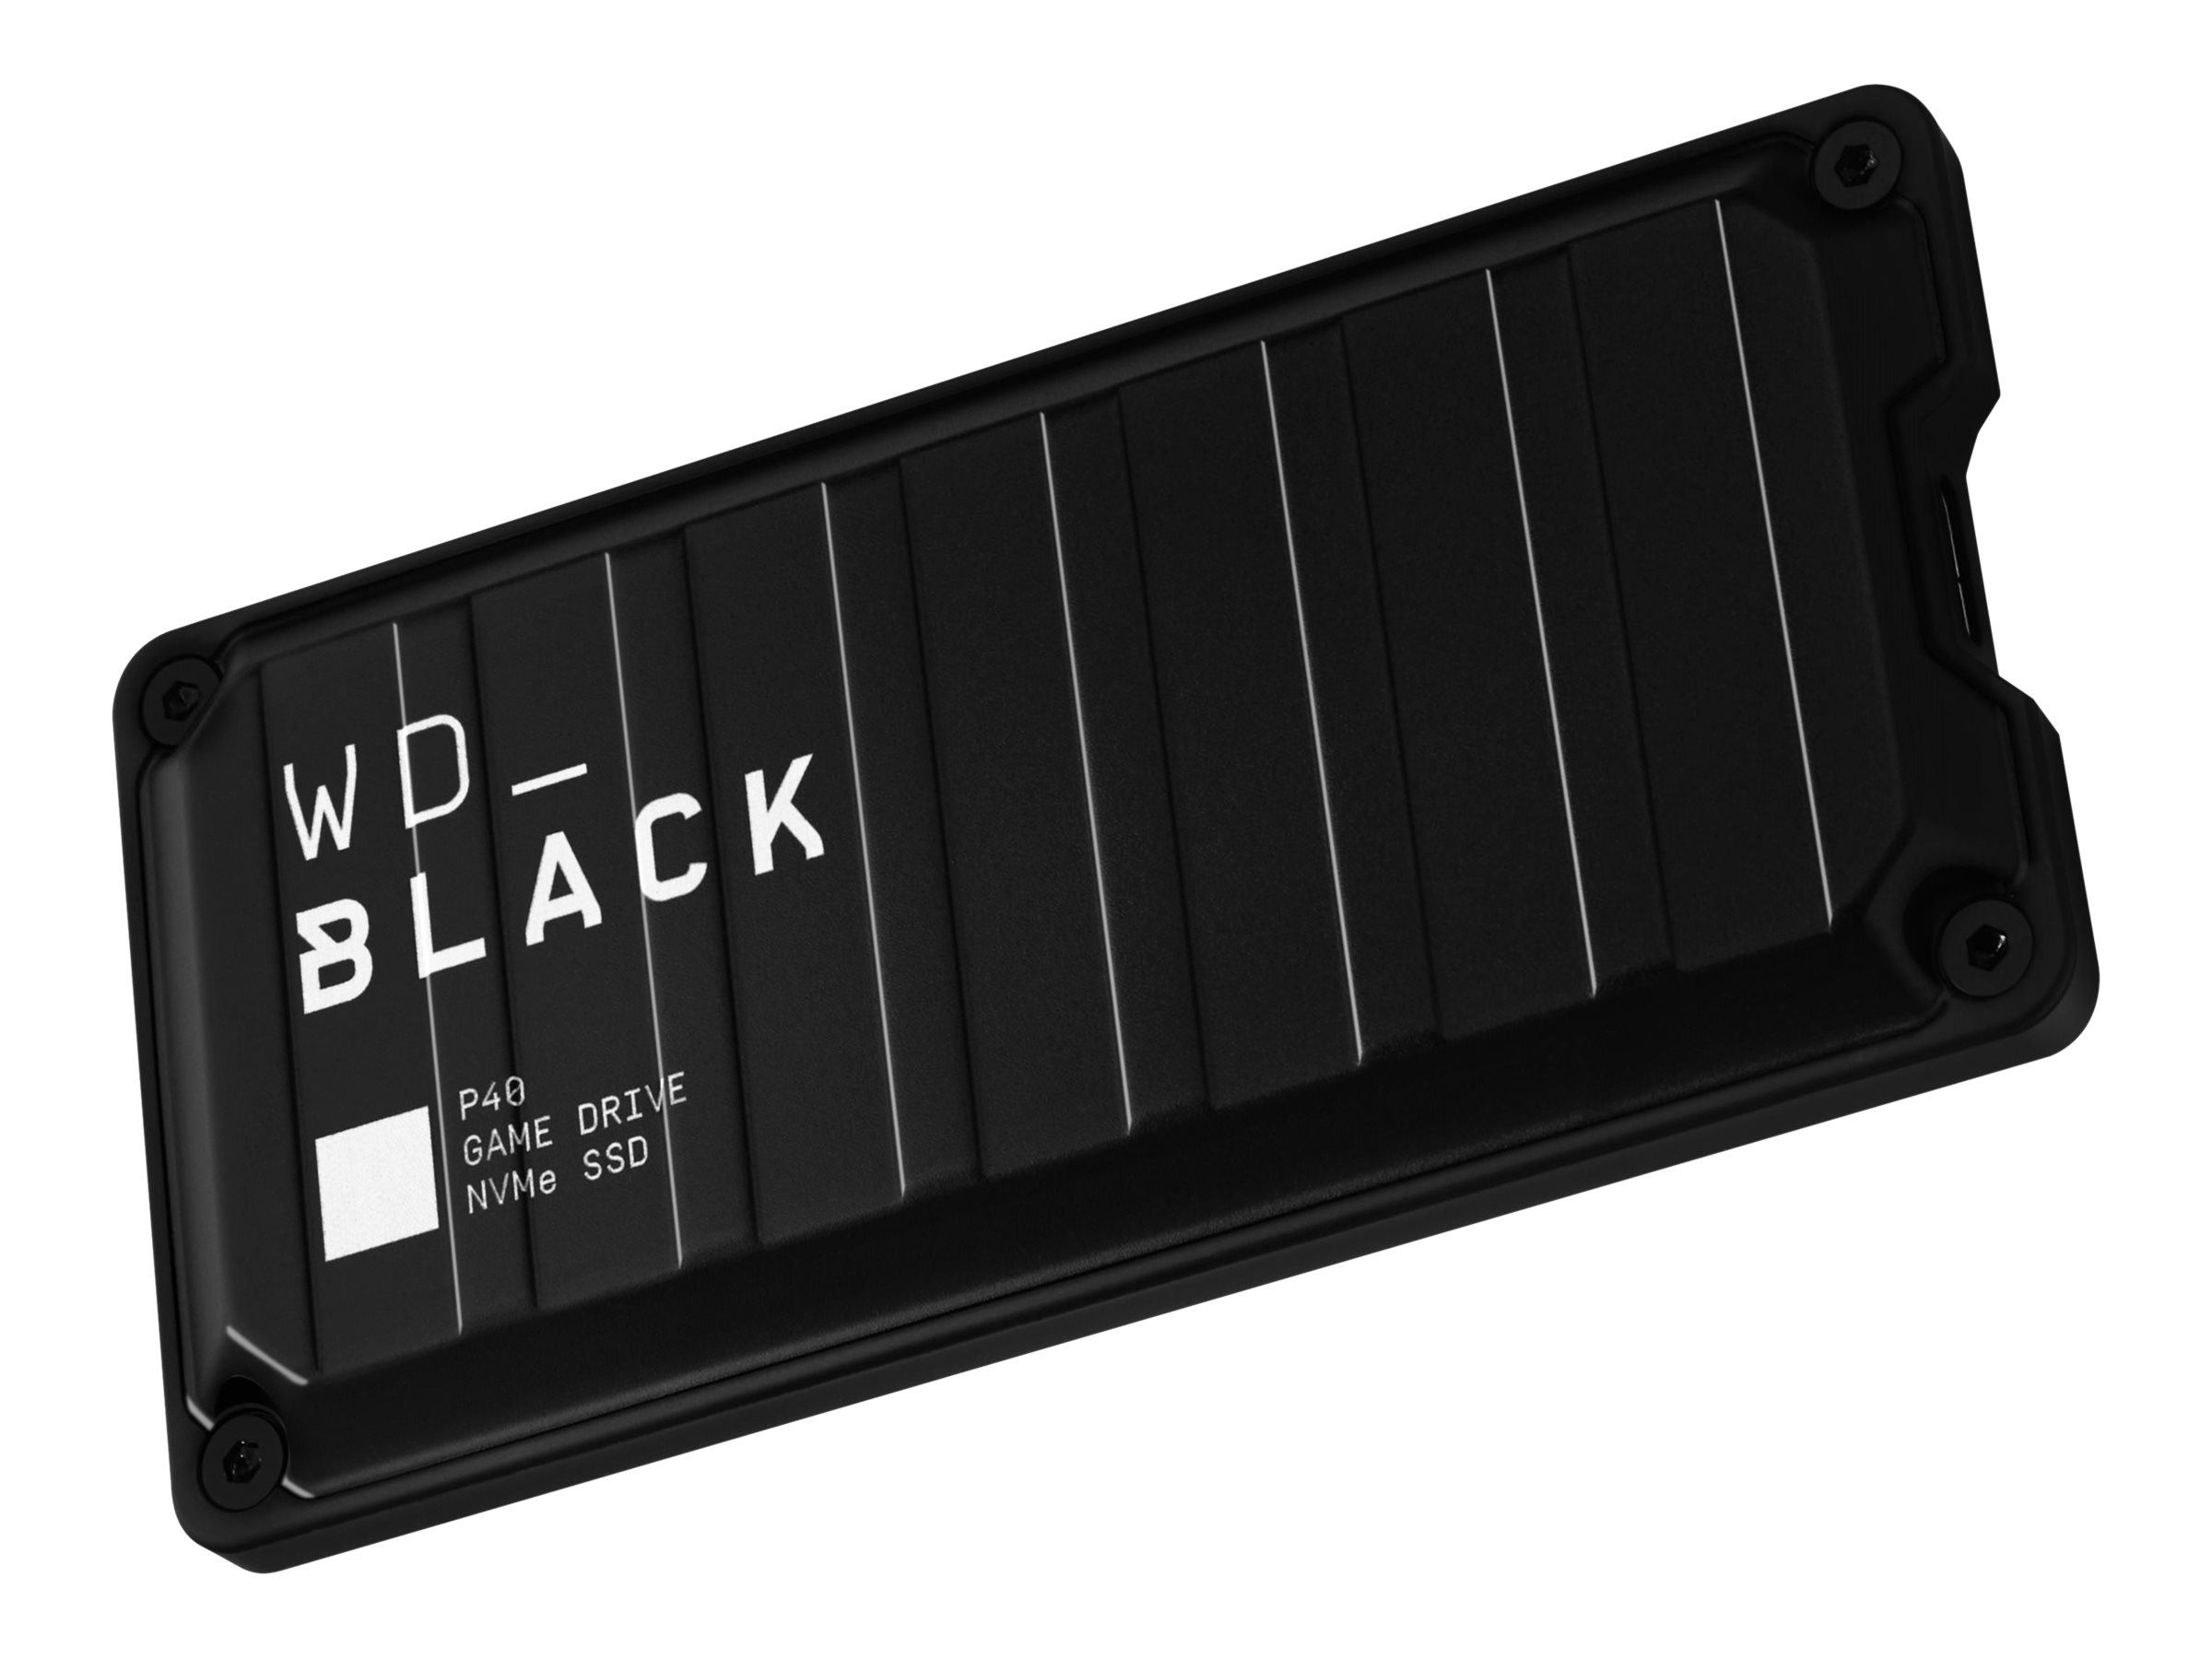 WD_BLACK P40 Schwarz WDBAWY0010BBK Gen USB extern, SSD, Game 3.2 Drive Speicher TB , 1